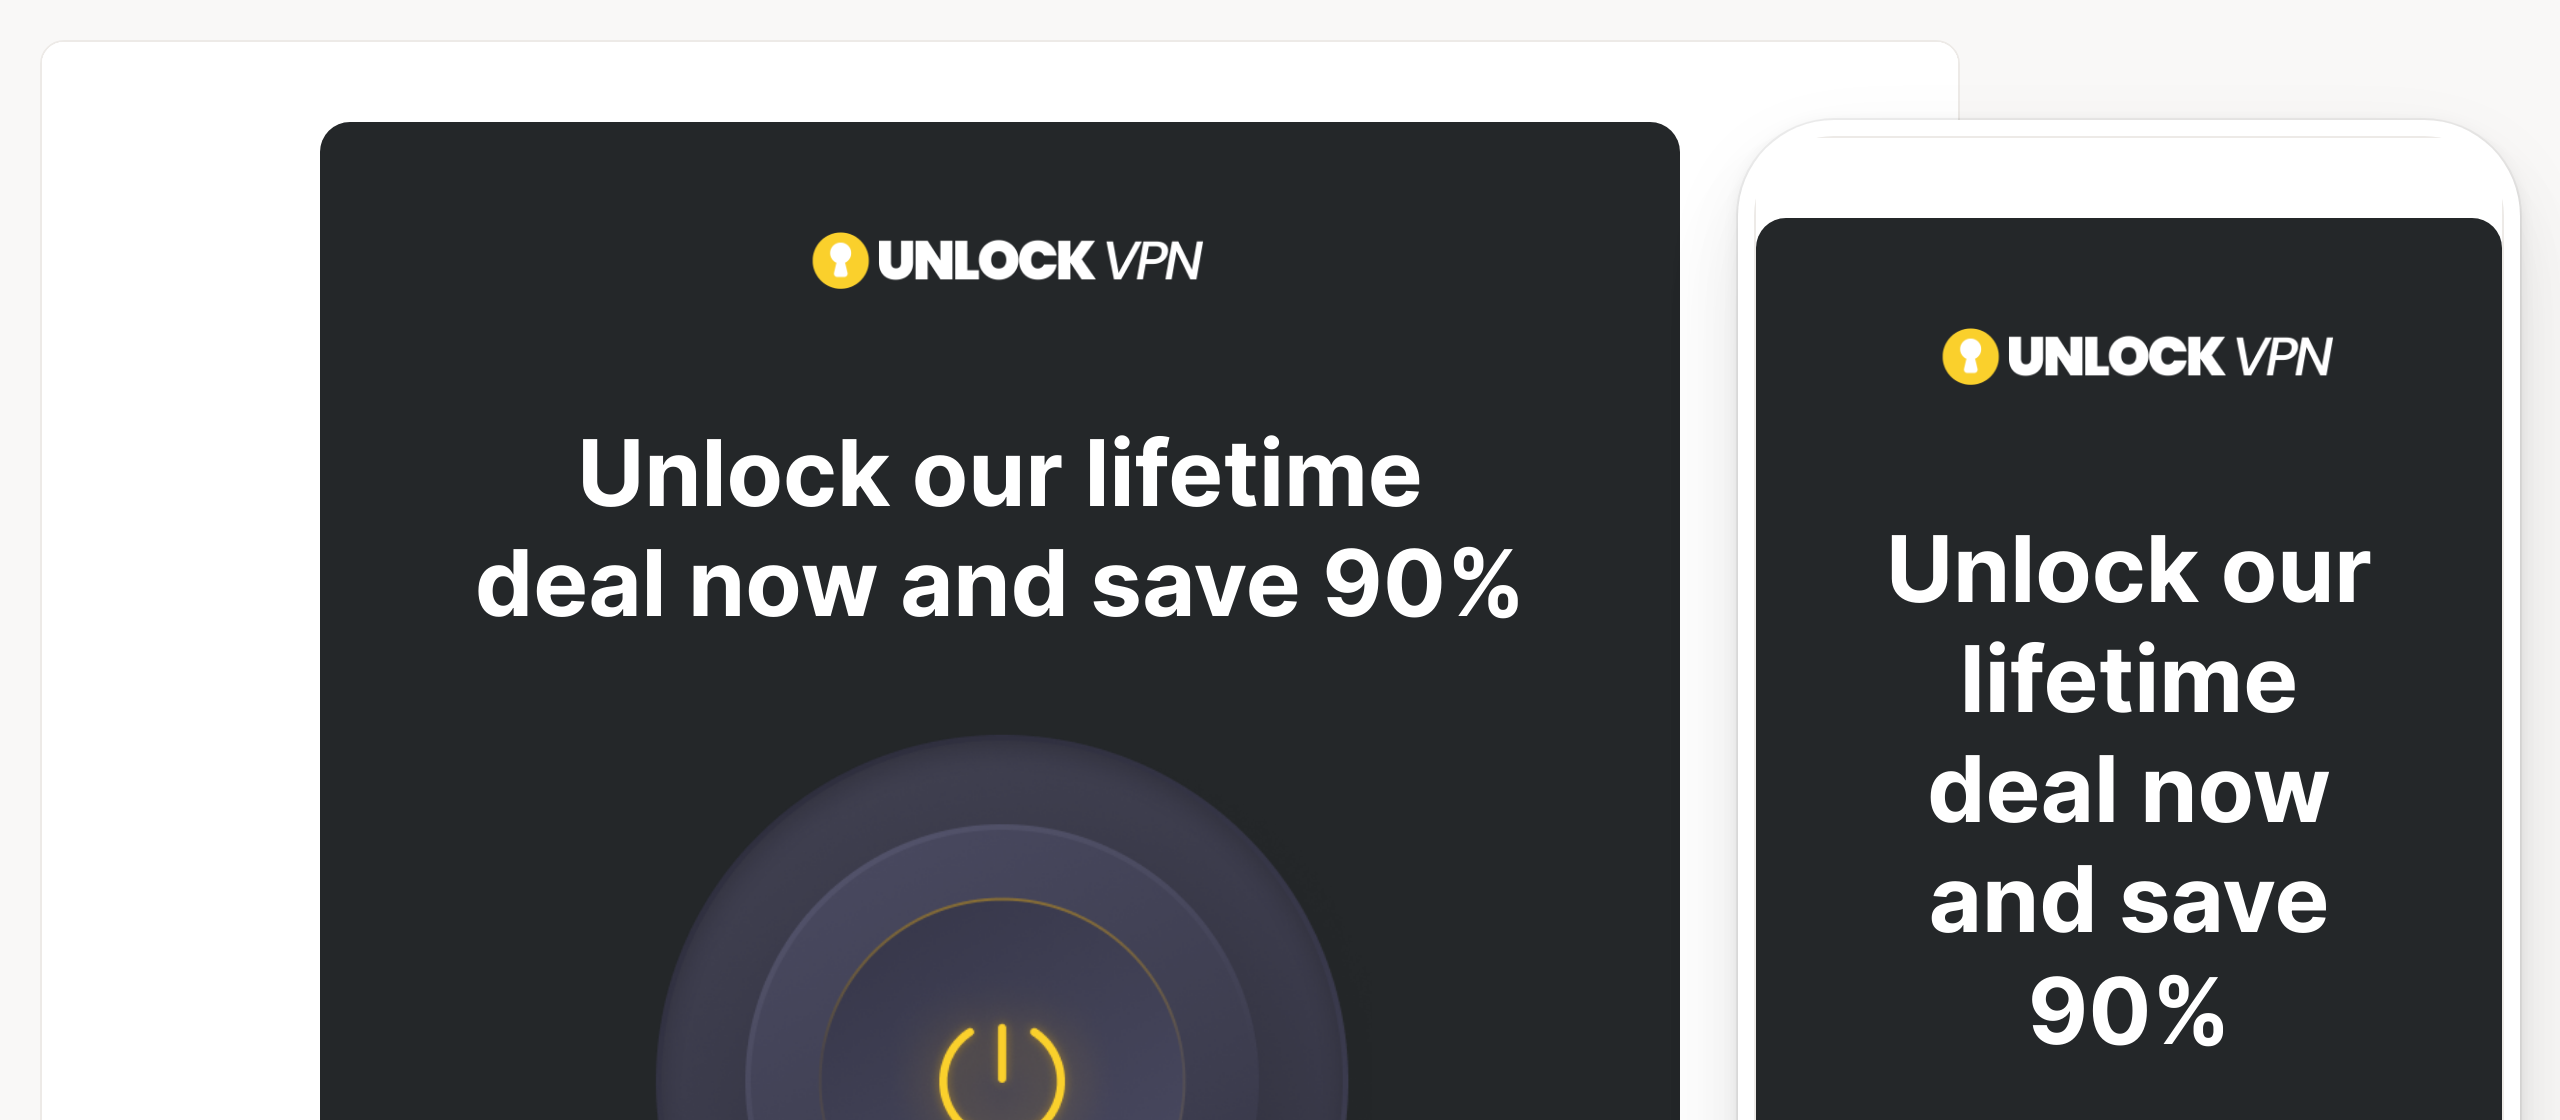 VPN lifetime deal